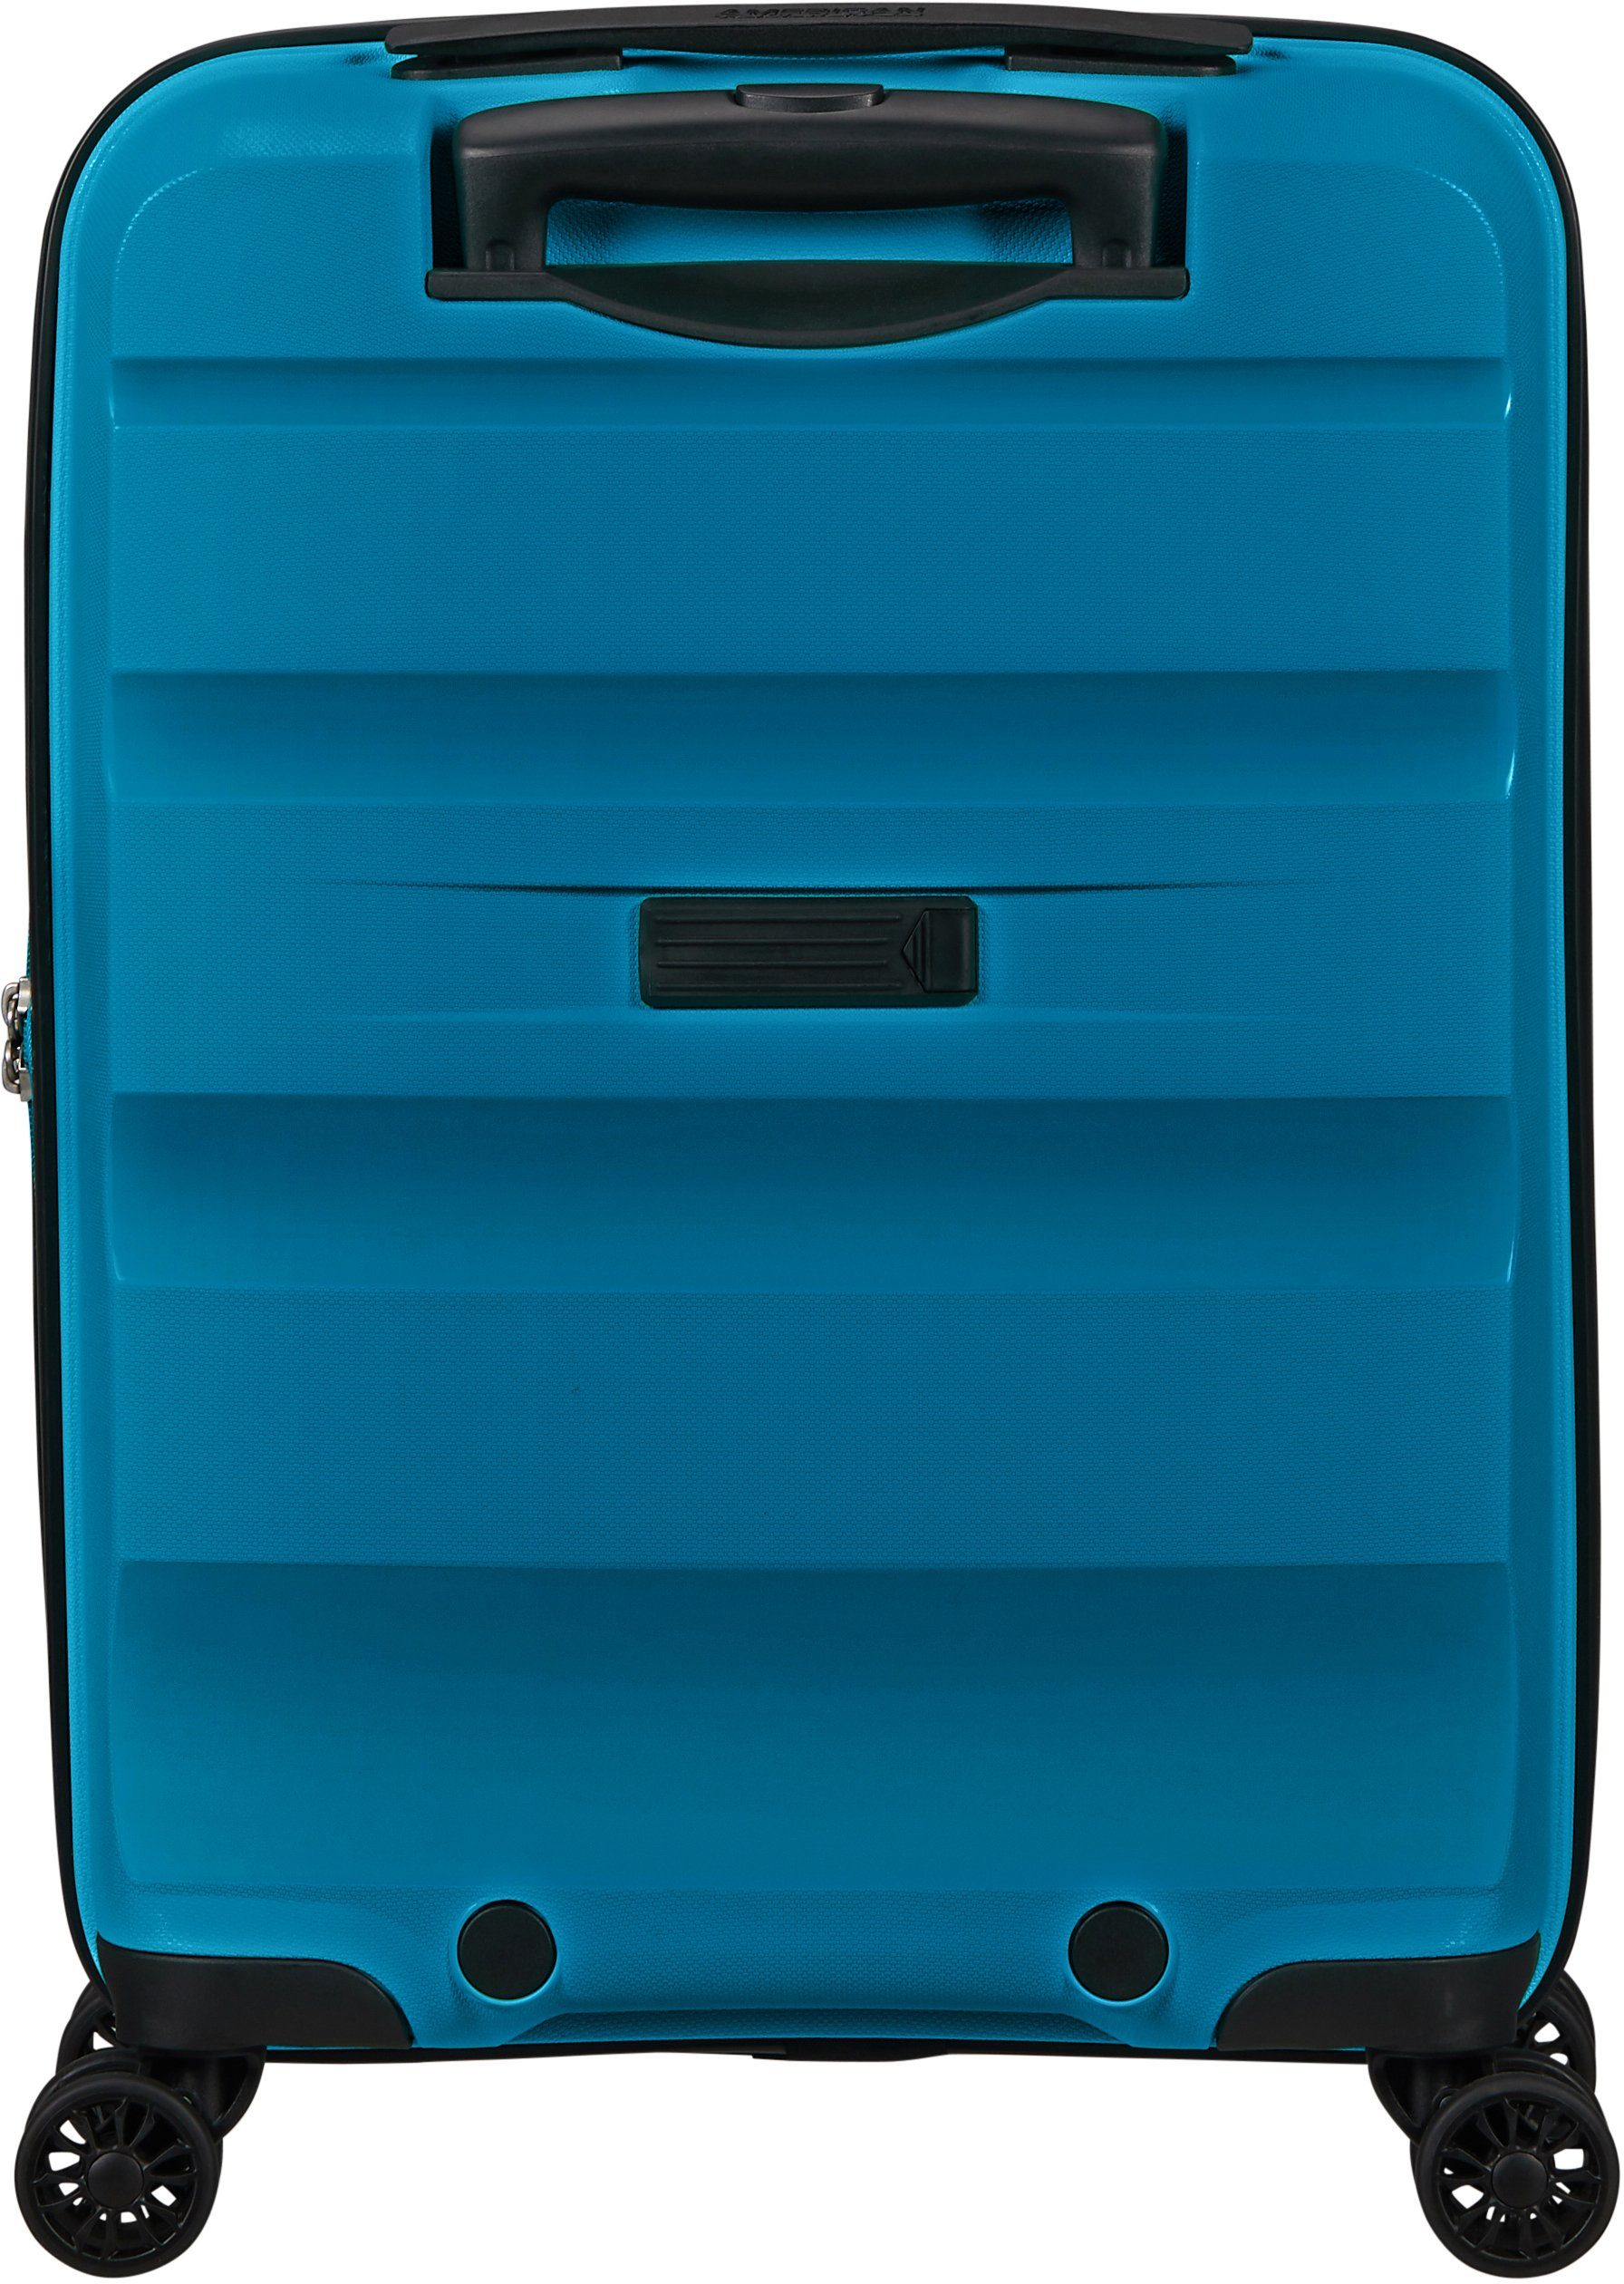 4 Blue Air Hartschalen-Trolley Rollen Seaport American cm, DLX, Tourister® 55 Bon